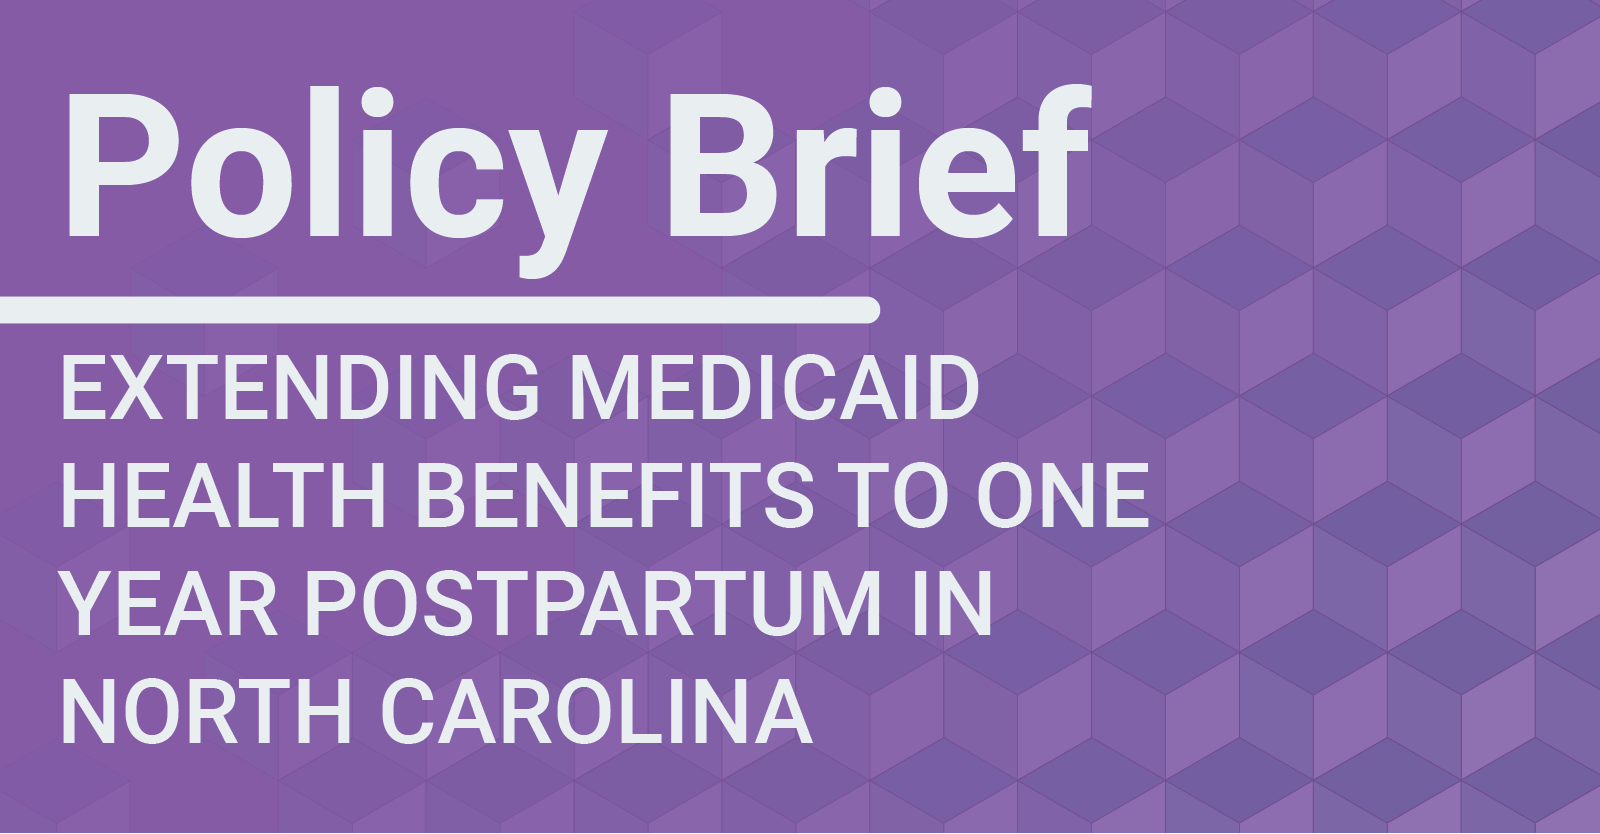 Policy Brief: Postpartum Medicaid Coverage in North Carolina